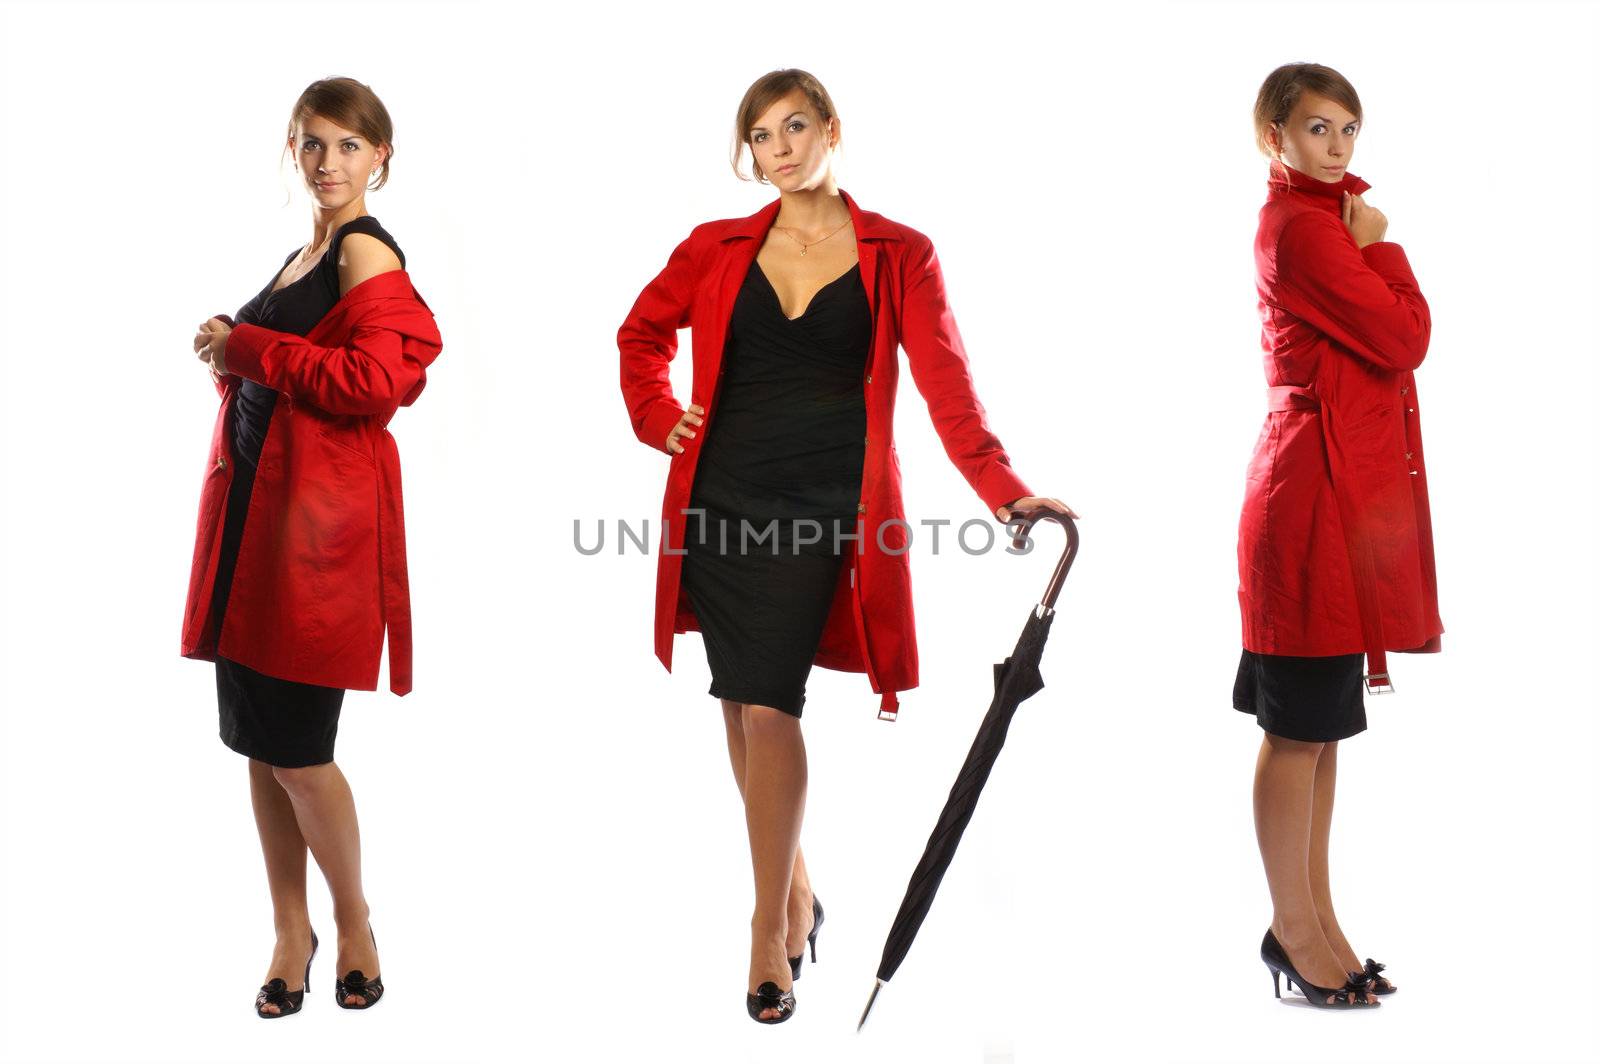 Lady in red by shmeljov